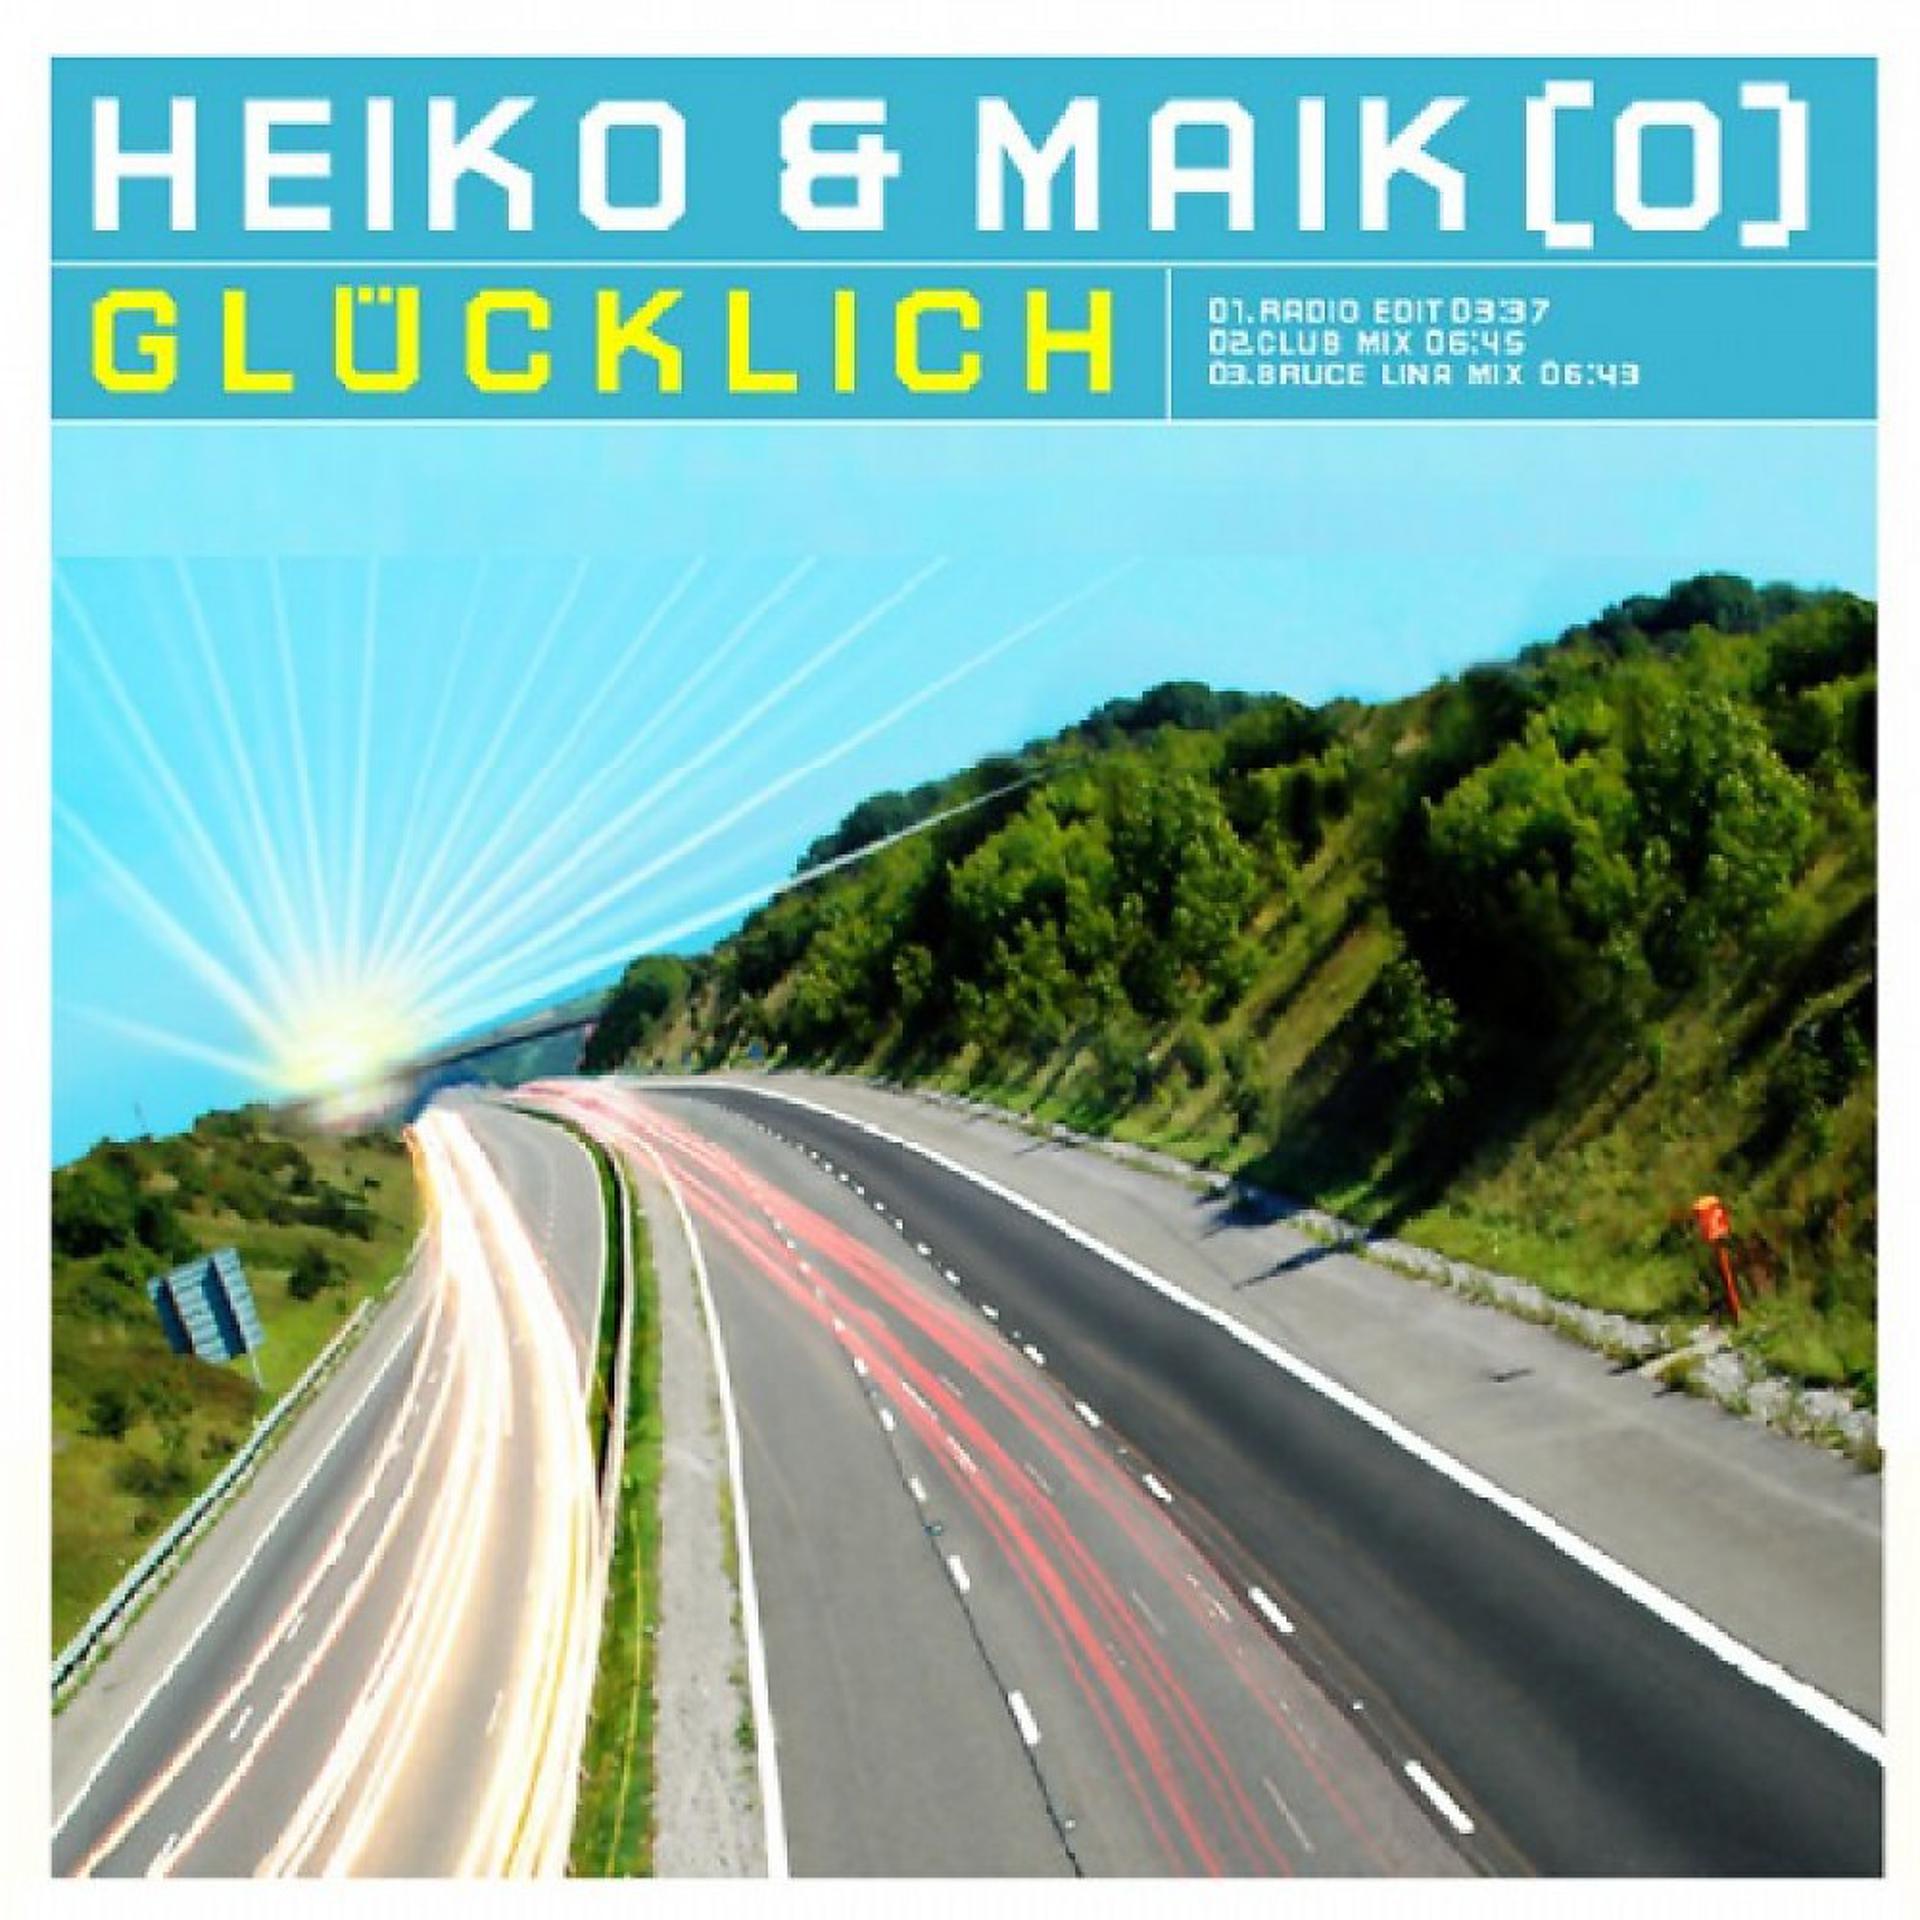 Постер к треку Heiko, Maiko - Glücklich (Endless Summer Cut)